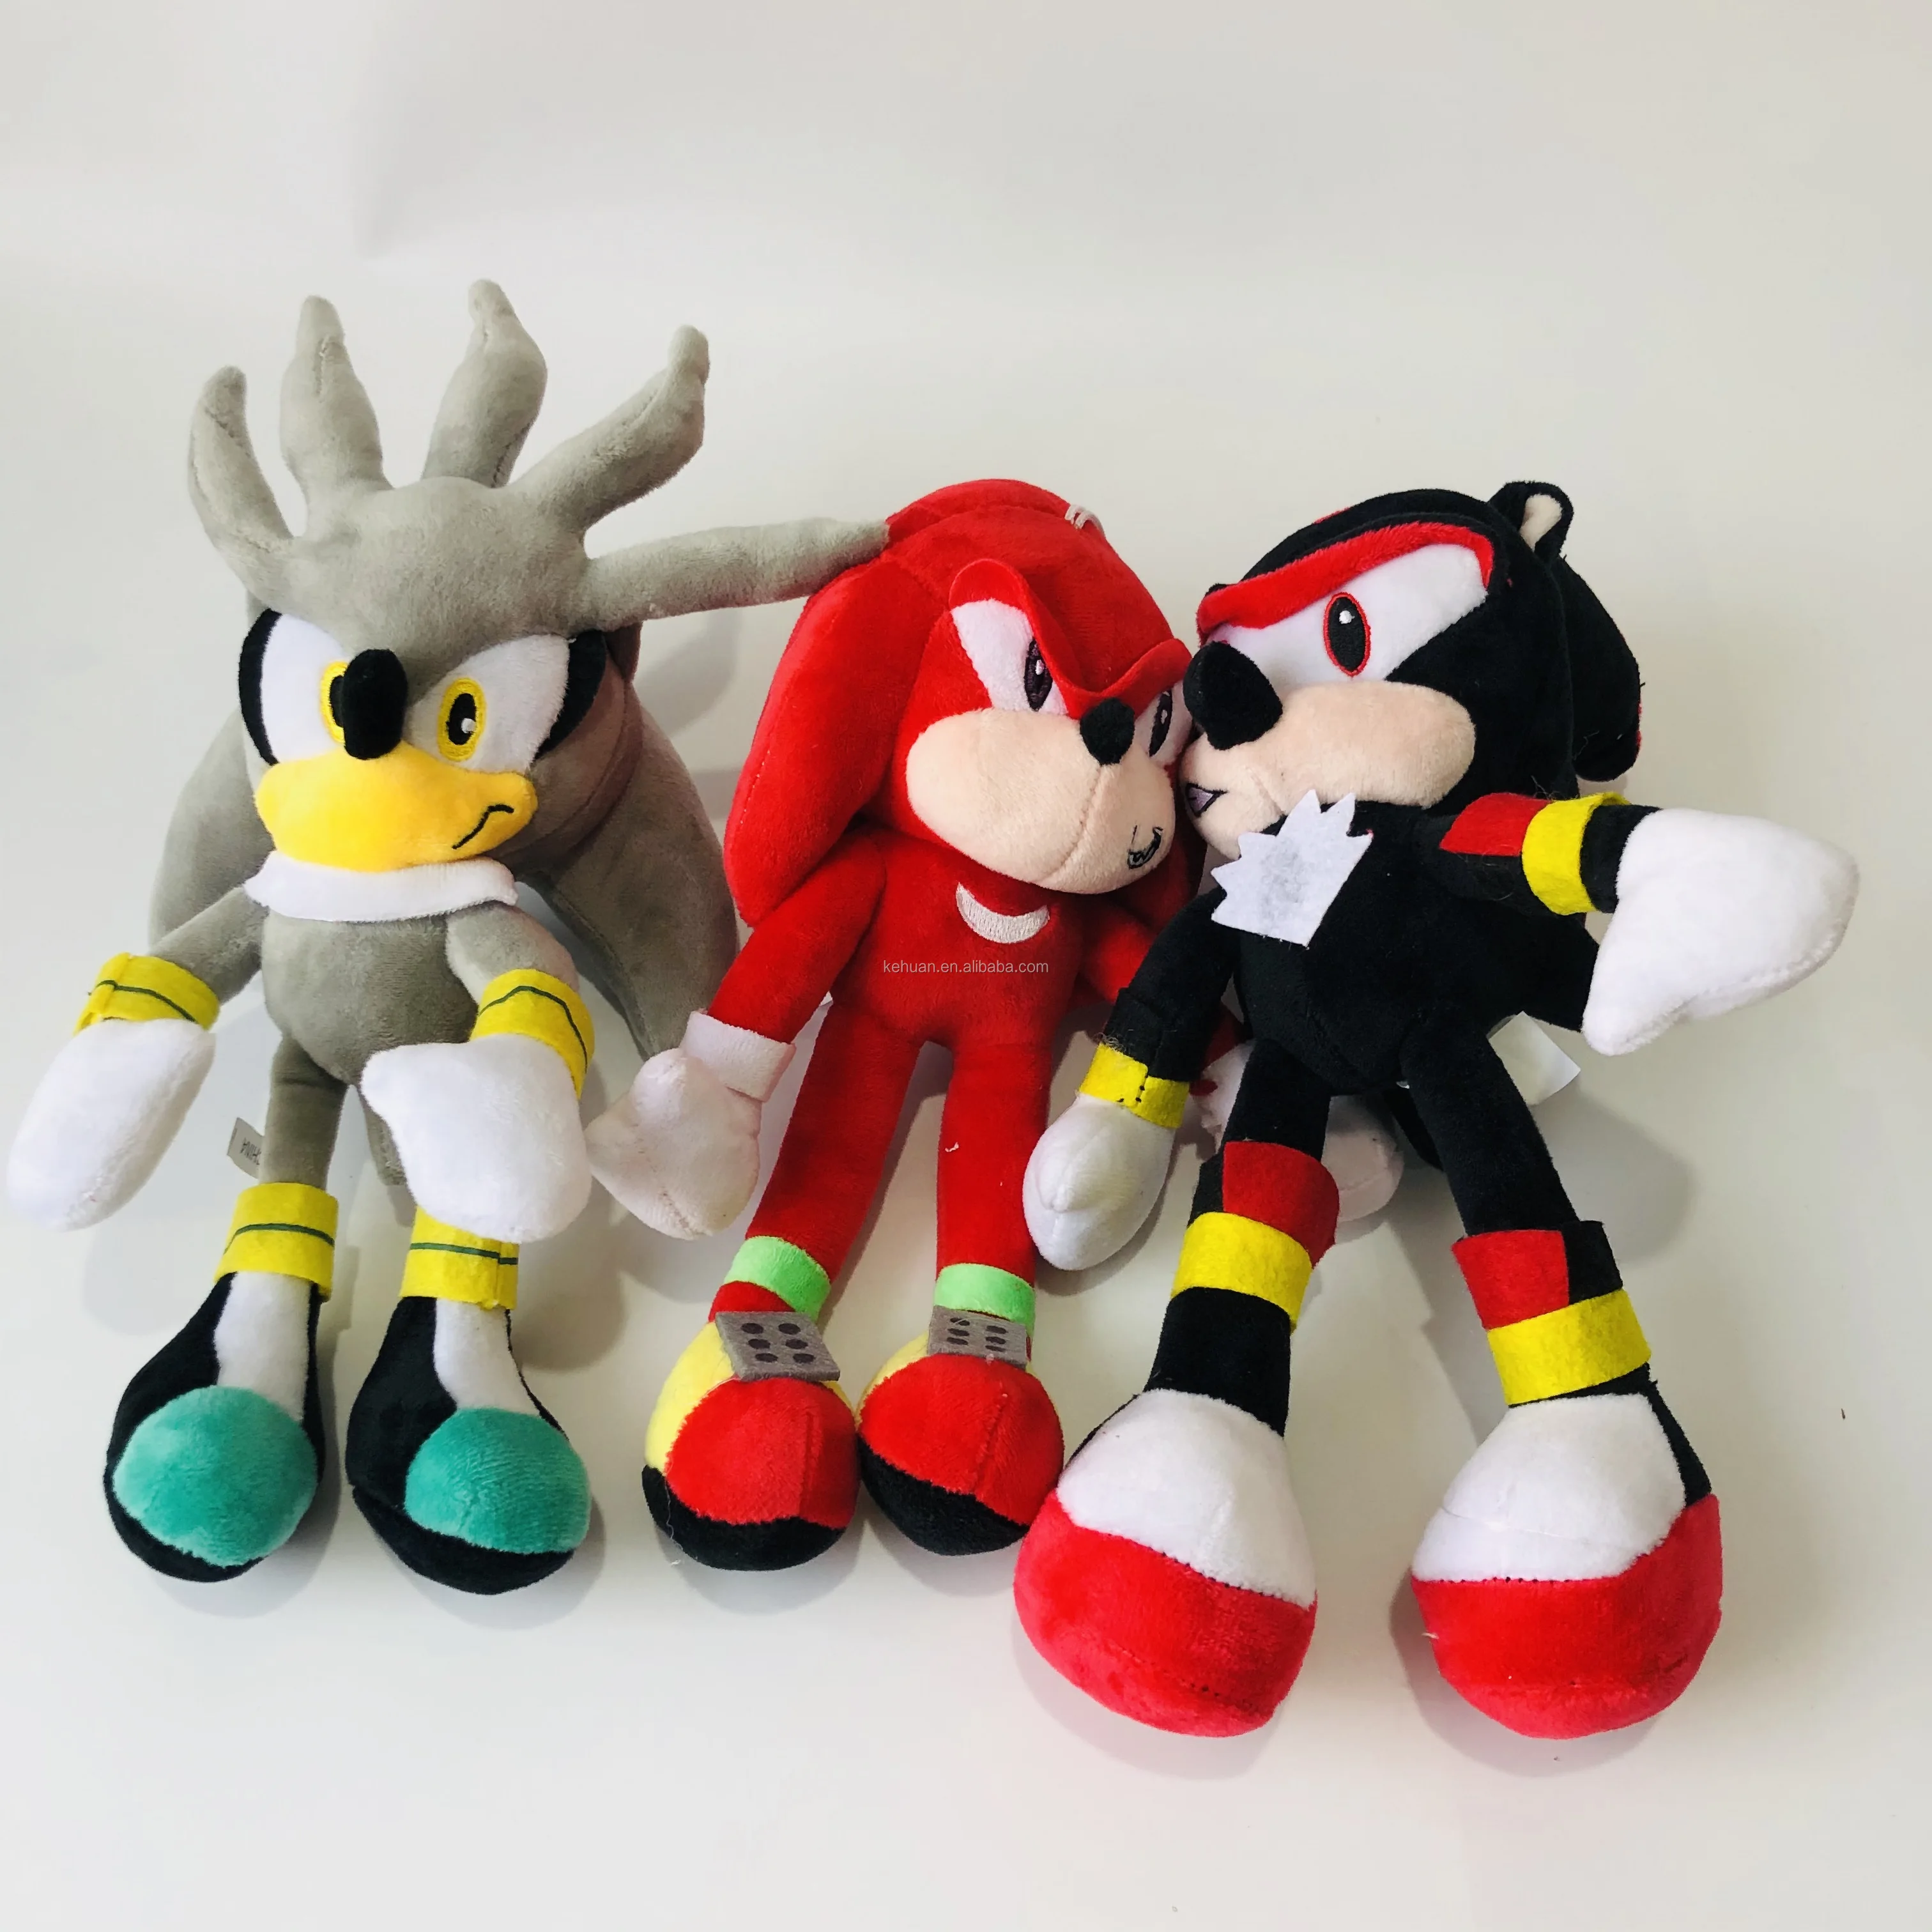 Animation The Sonic Hedgehog Peluche Toy Pelucia Sonic Plush - Buy ...